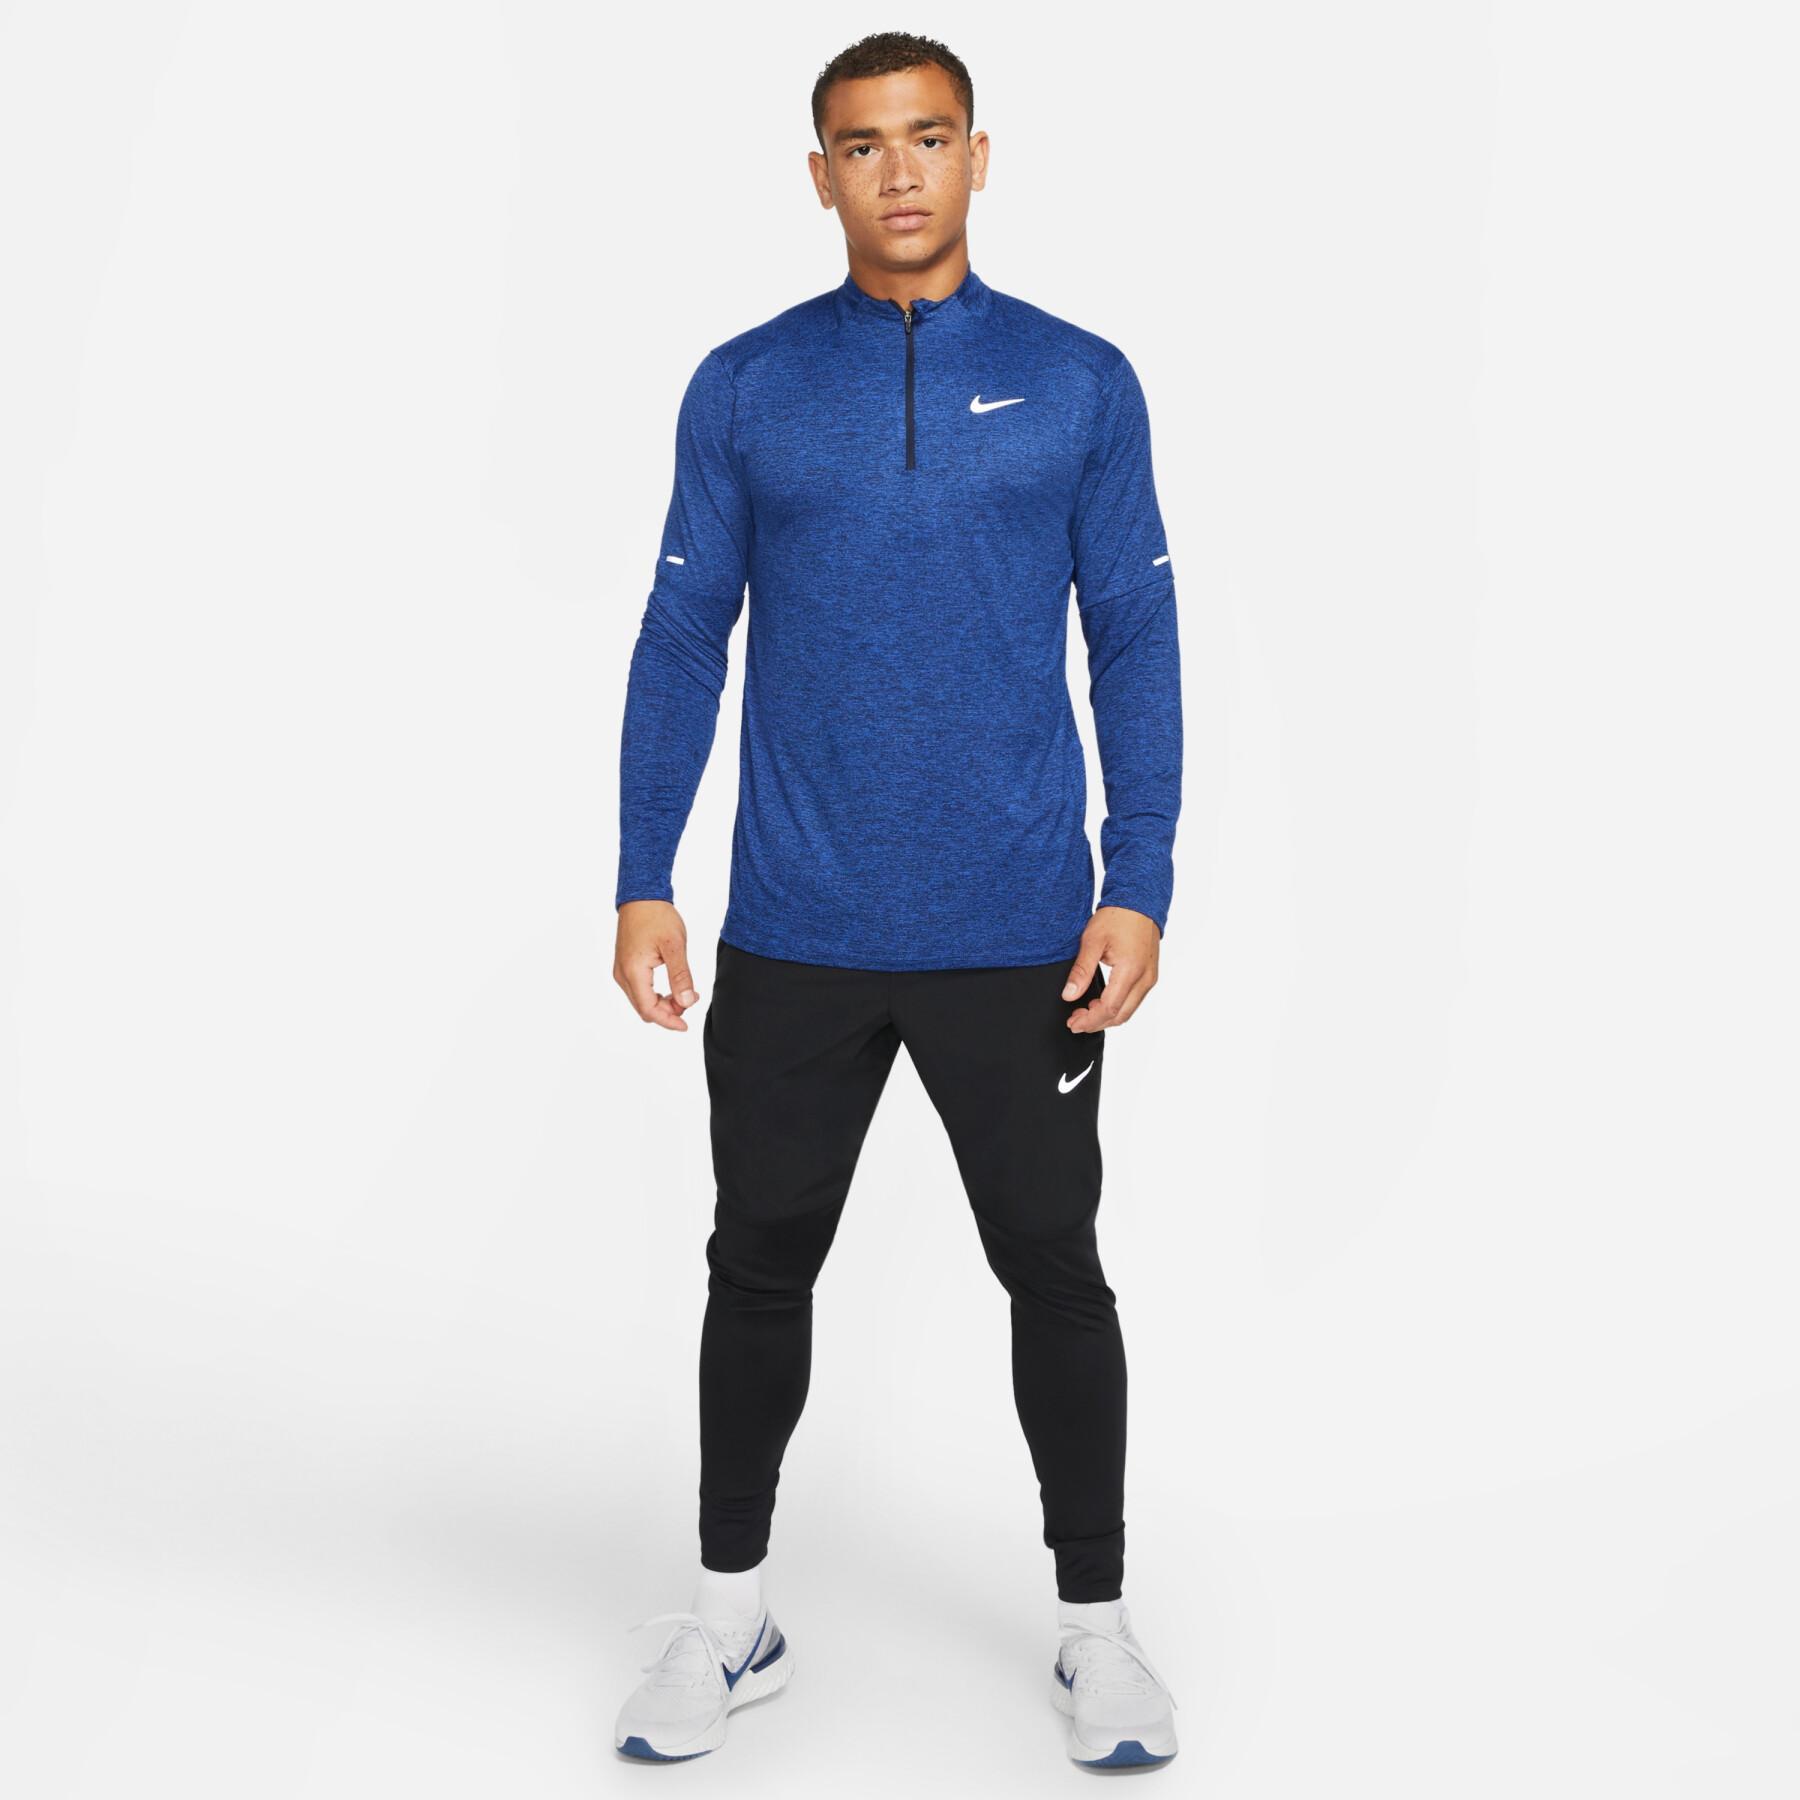 Koszulka Nike Dri-FIT Element